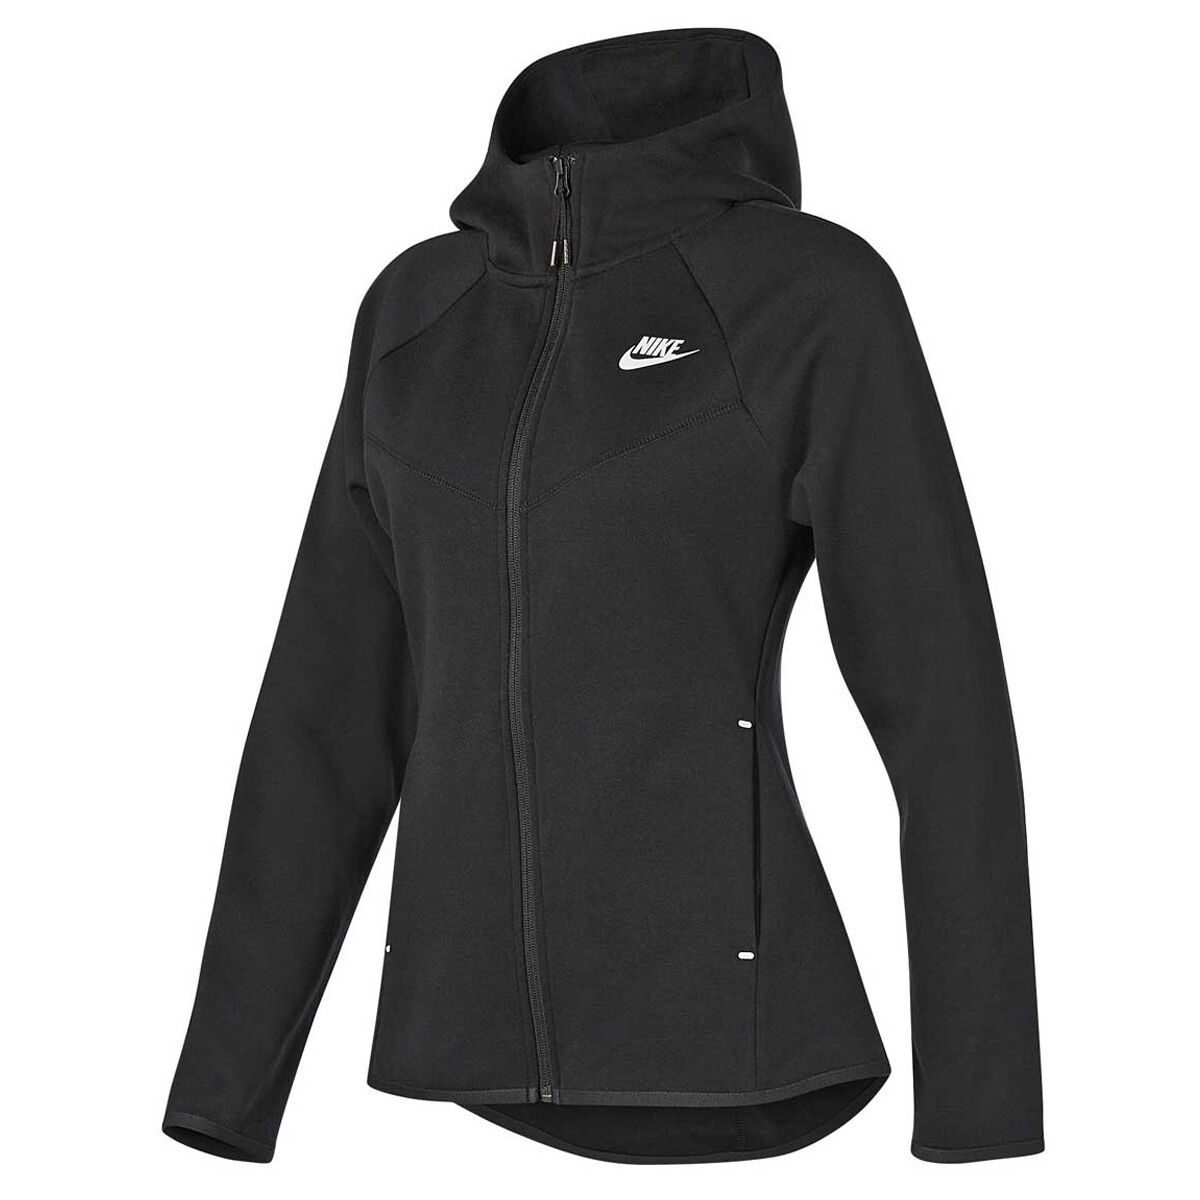 nike women's windrunner jacket sale